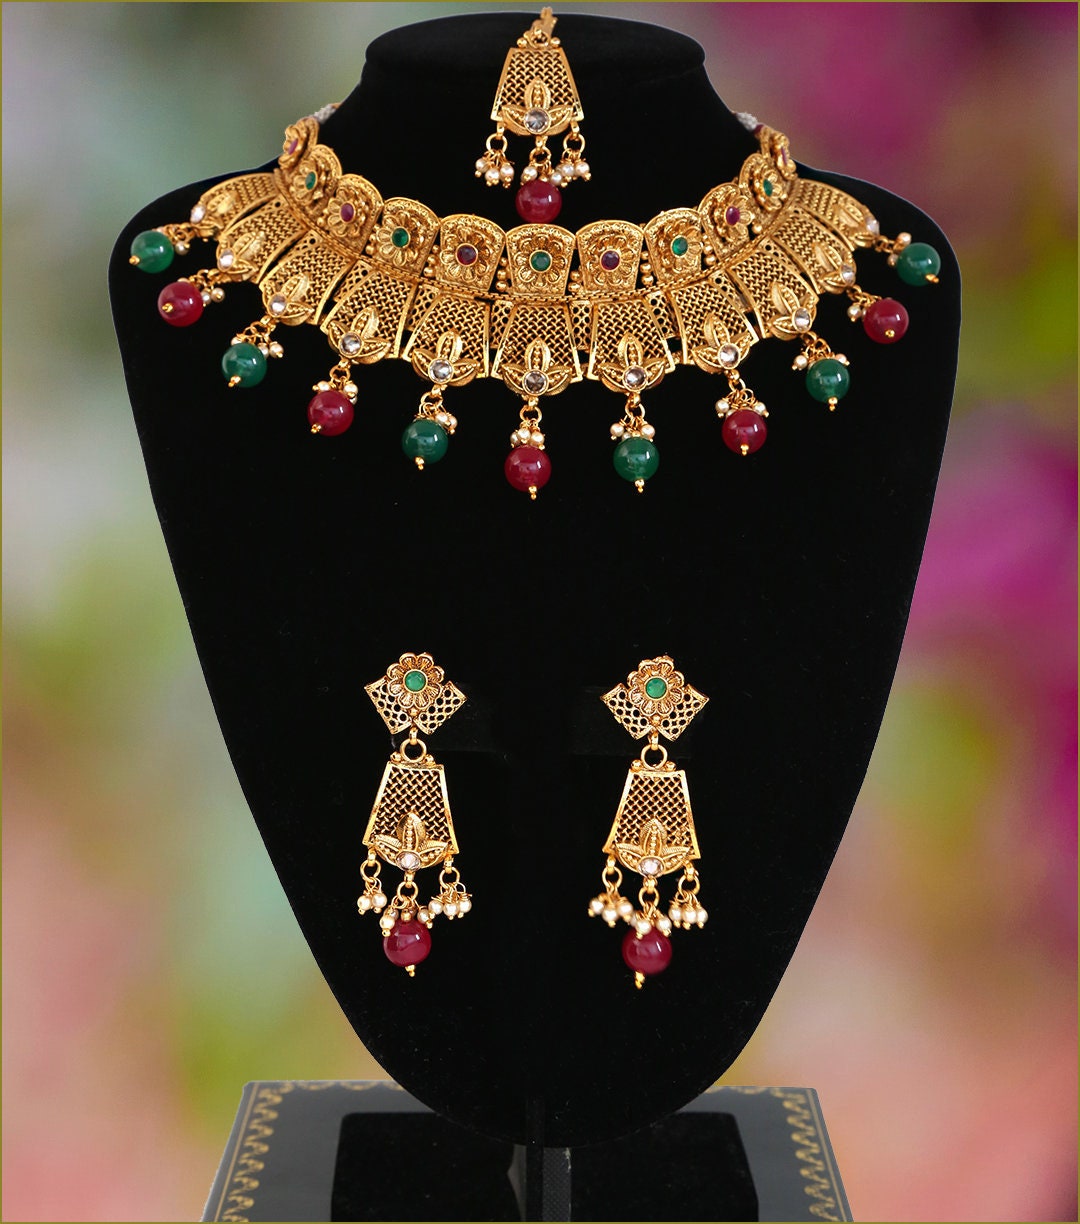 Kundan Polki Indian wedding Bridal Jewelry necklace with Matching earrings and Mang Tikka